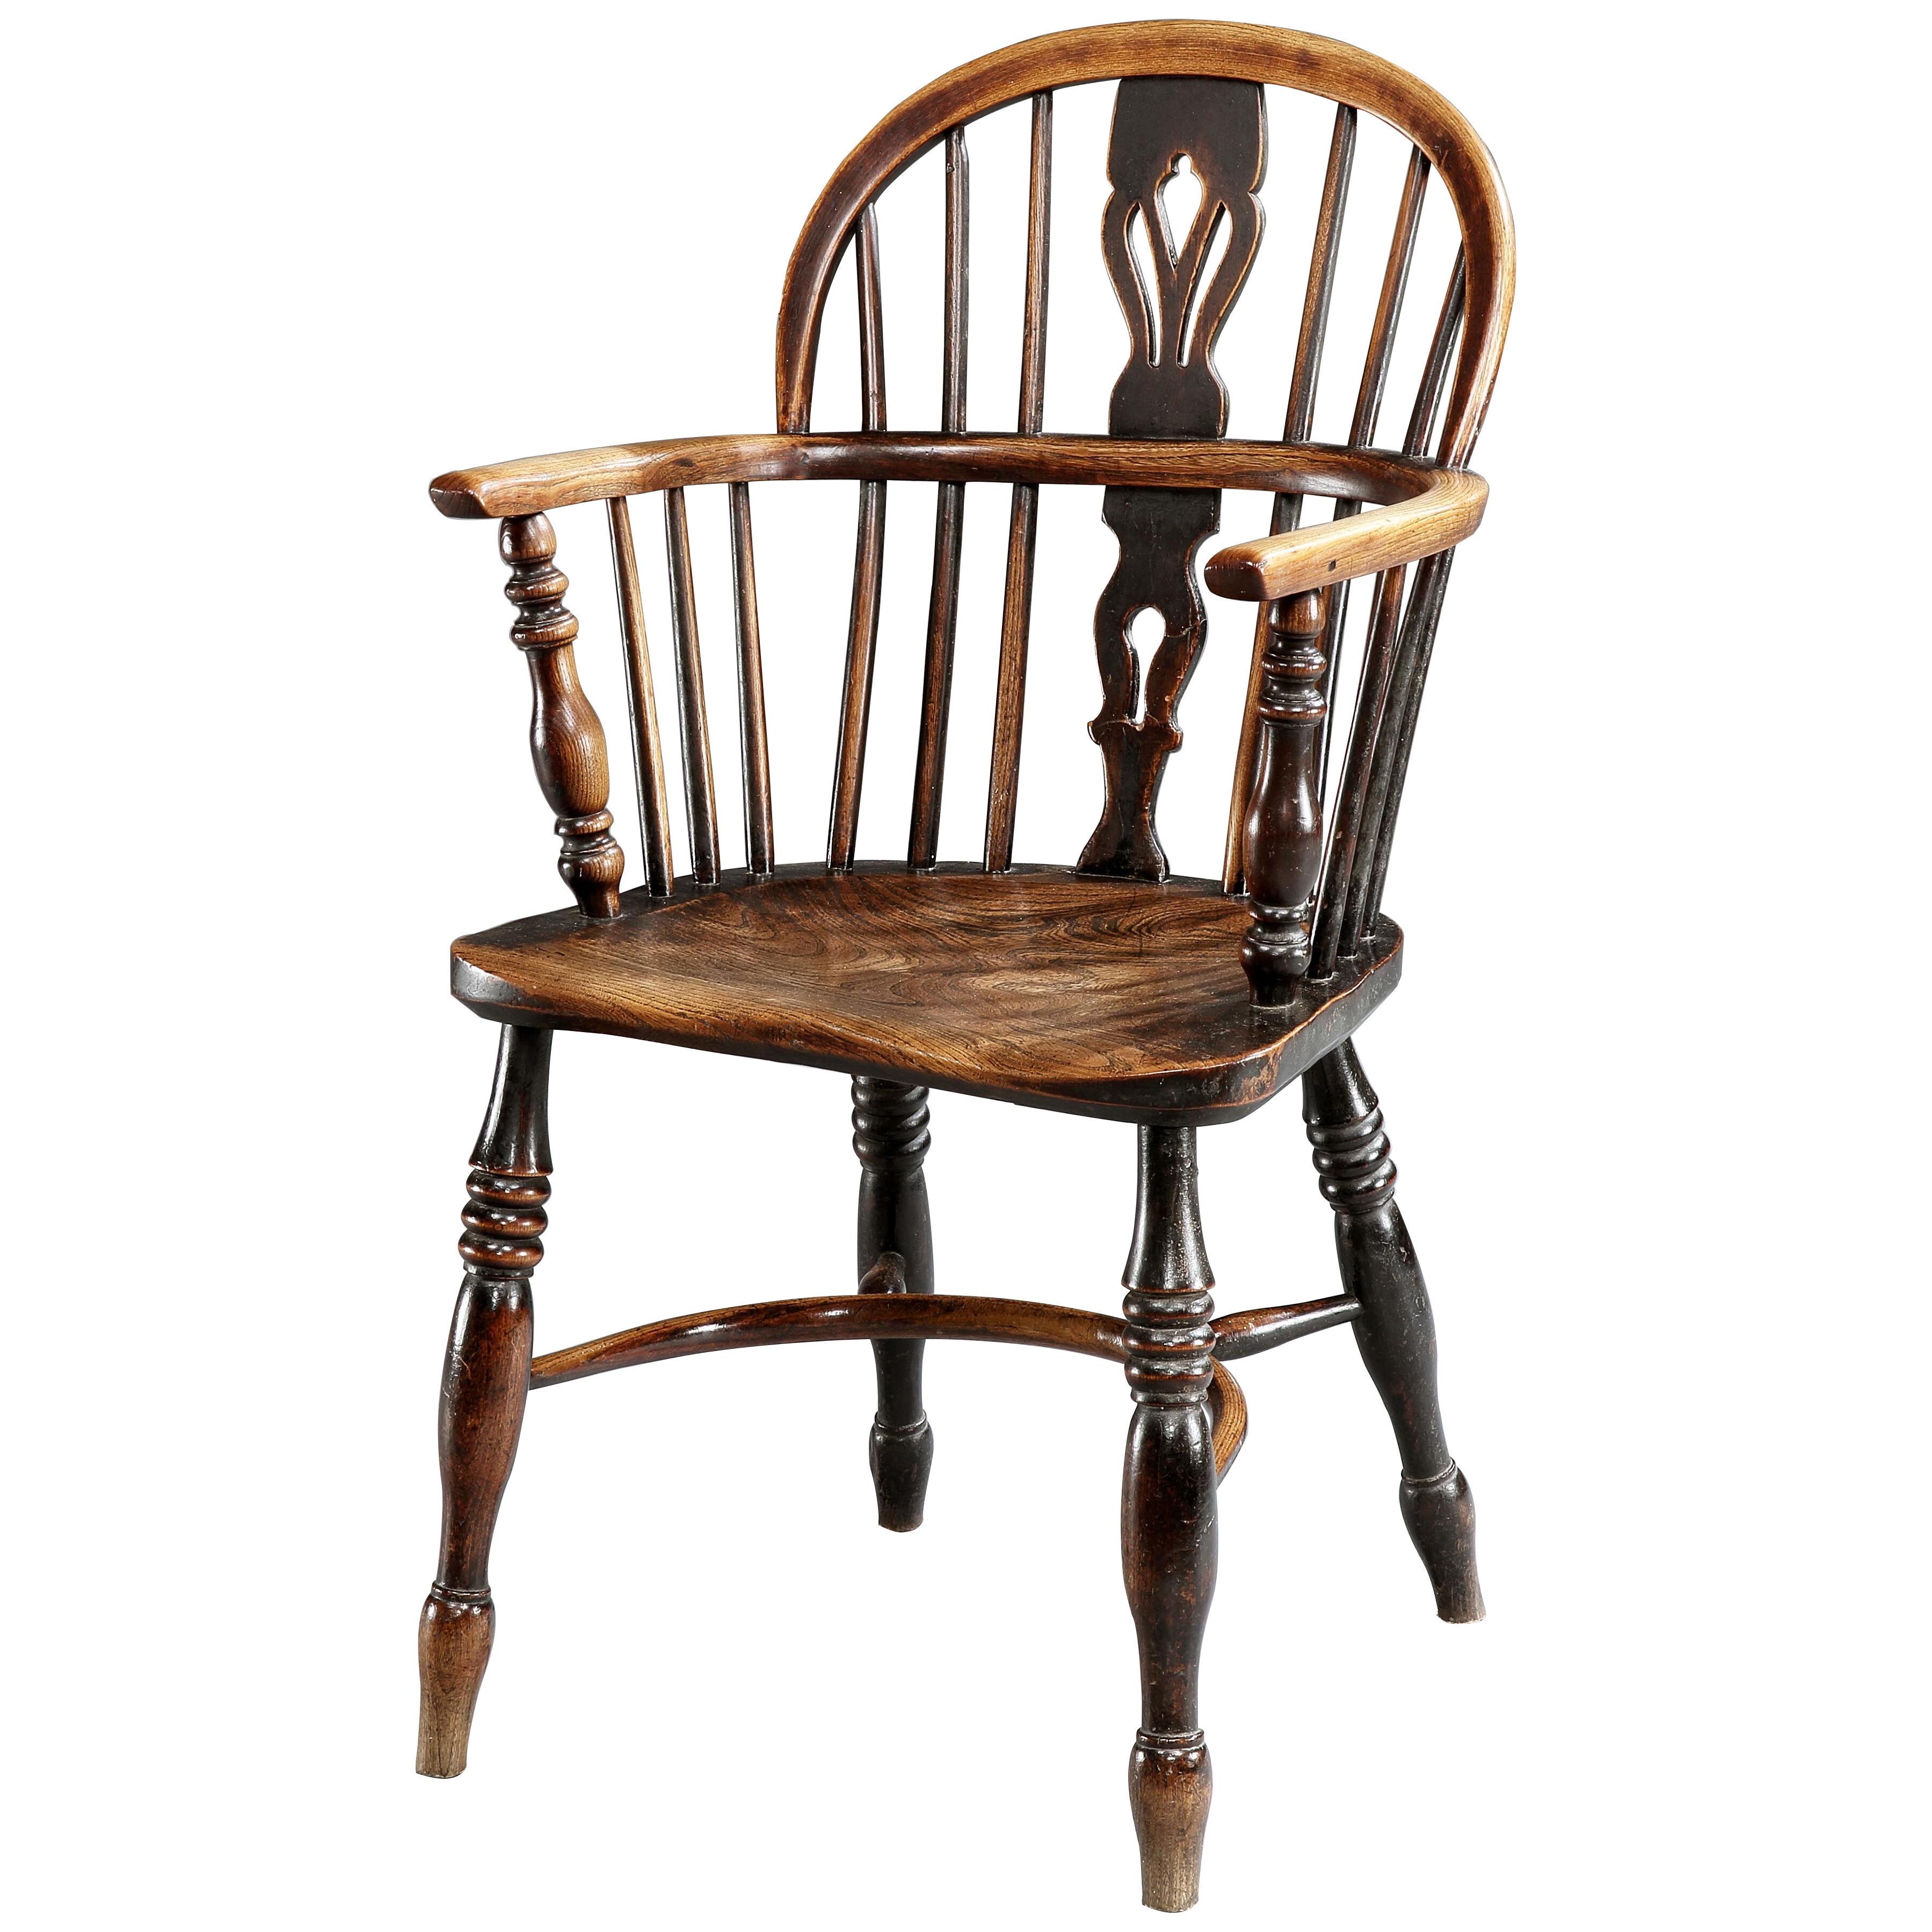 A 19th century Windsor chair